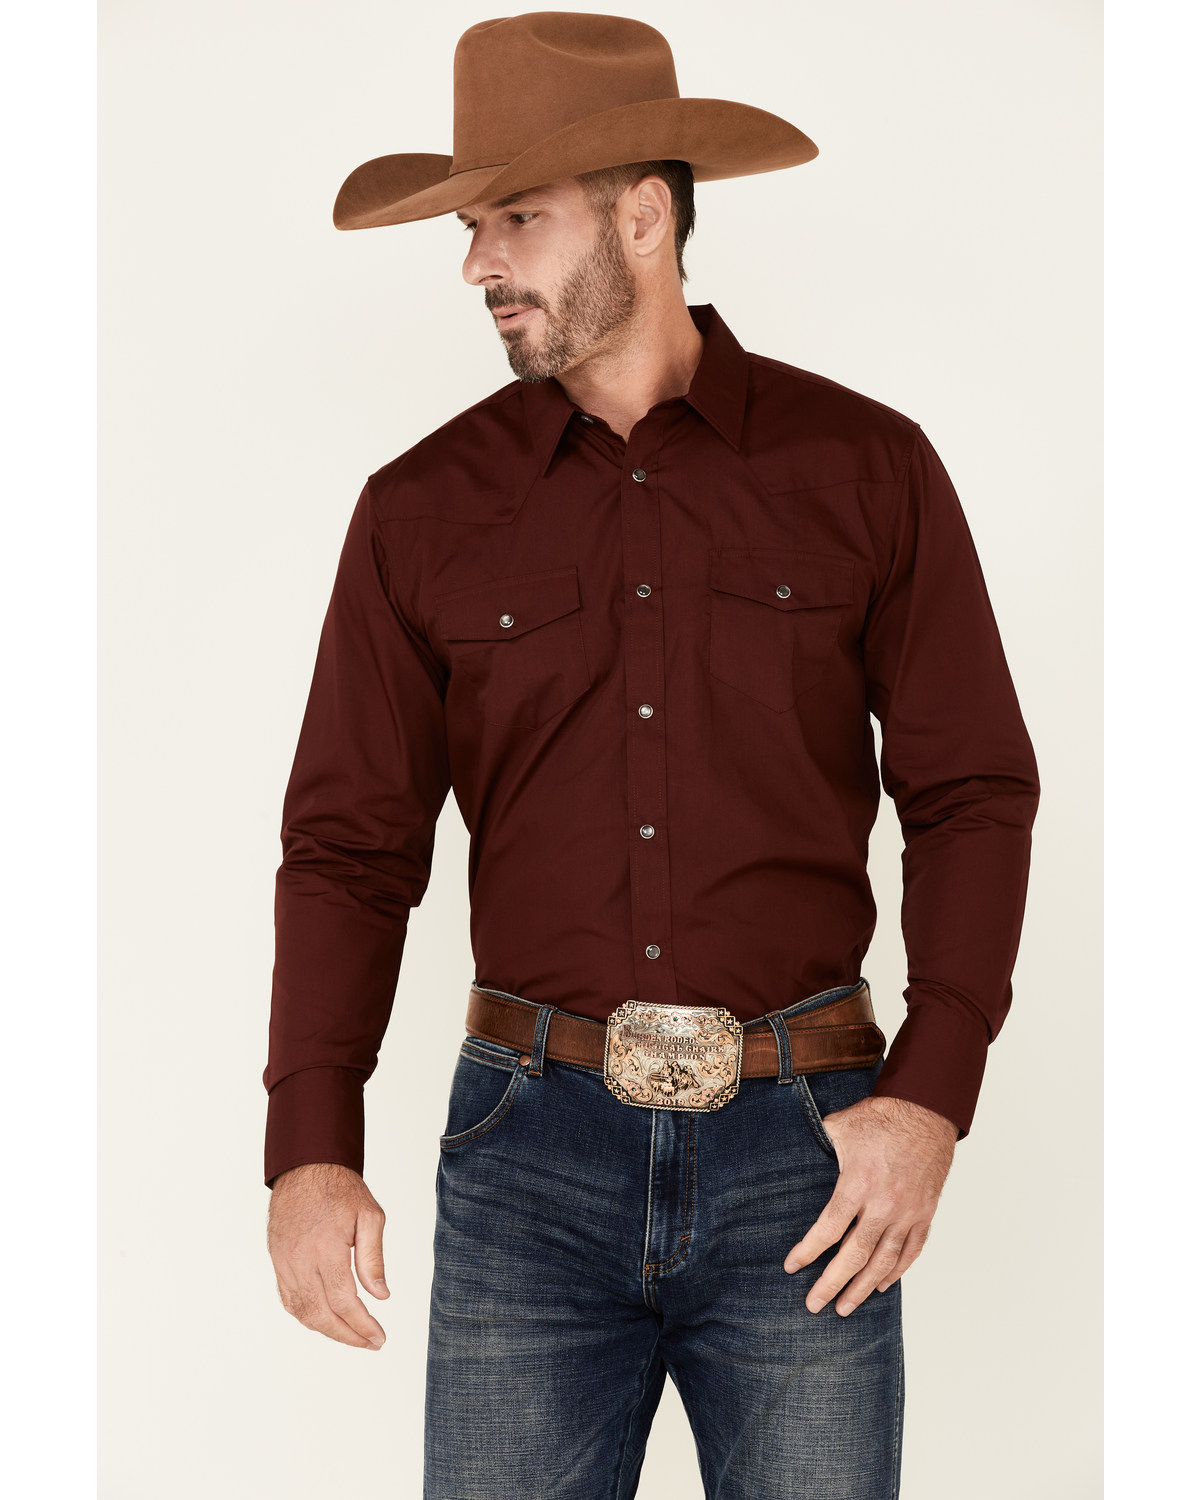 Gibson Men's Basic Solid Long Sleeve Pearl Snap Western Shirt - Big